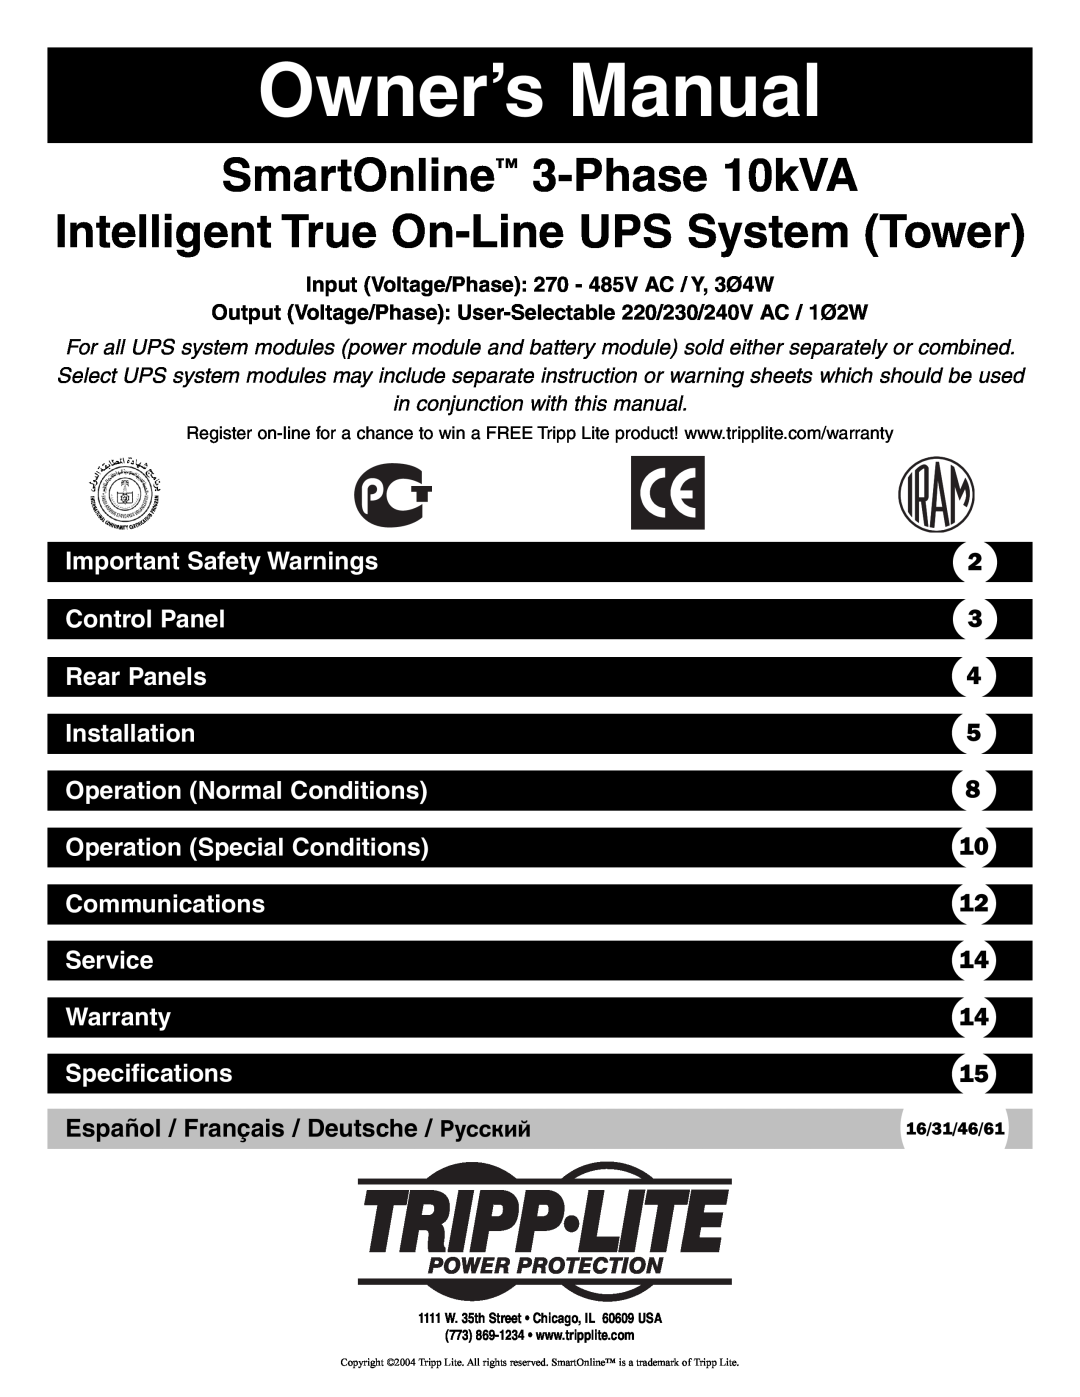 Tripp Lite 220/230/240V AC / 12W owner manual Owner’s Manual 